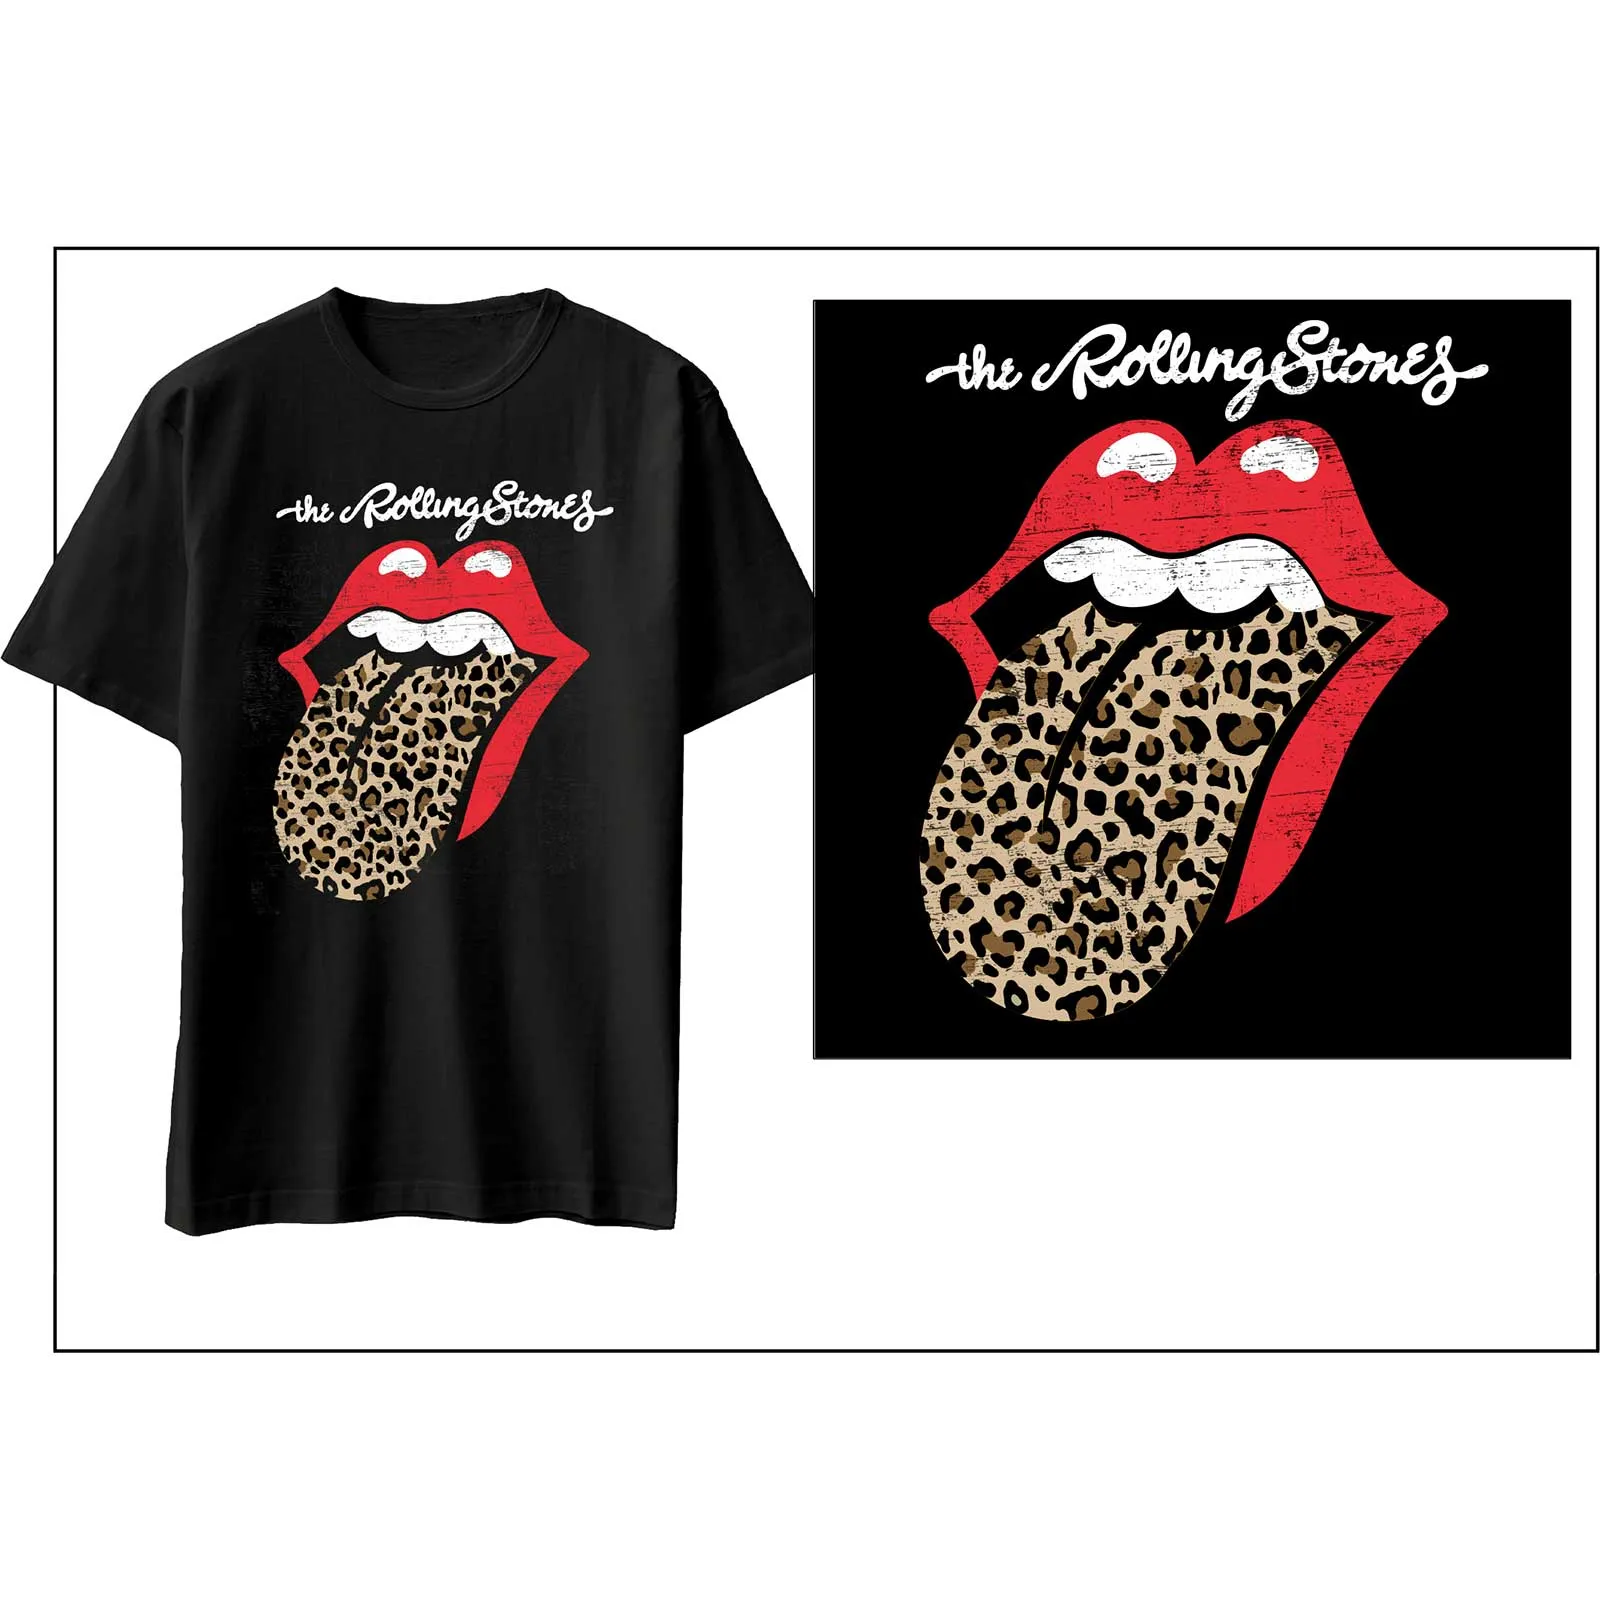 The Rolling Stones - Unisex T-Shirt Leopard Print Tongue artwork